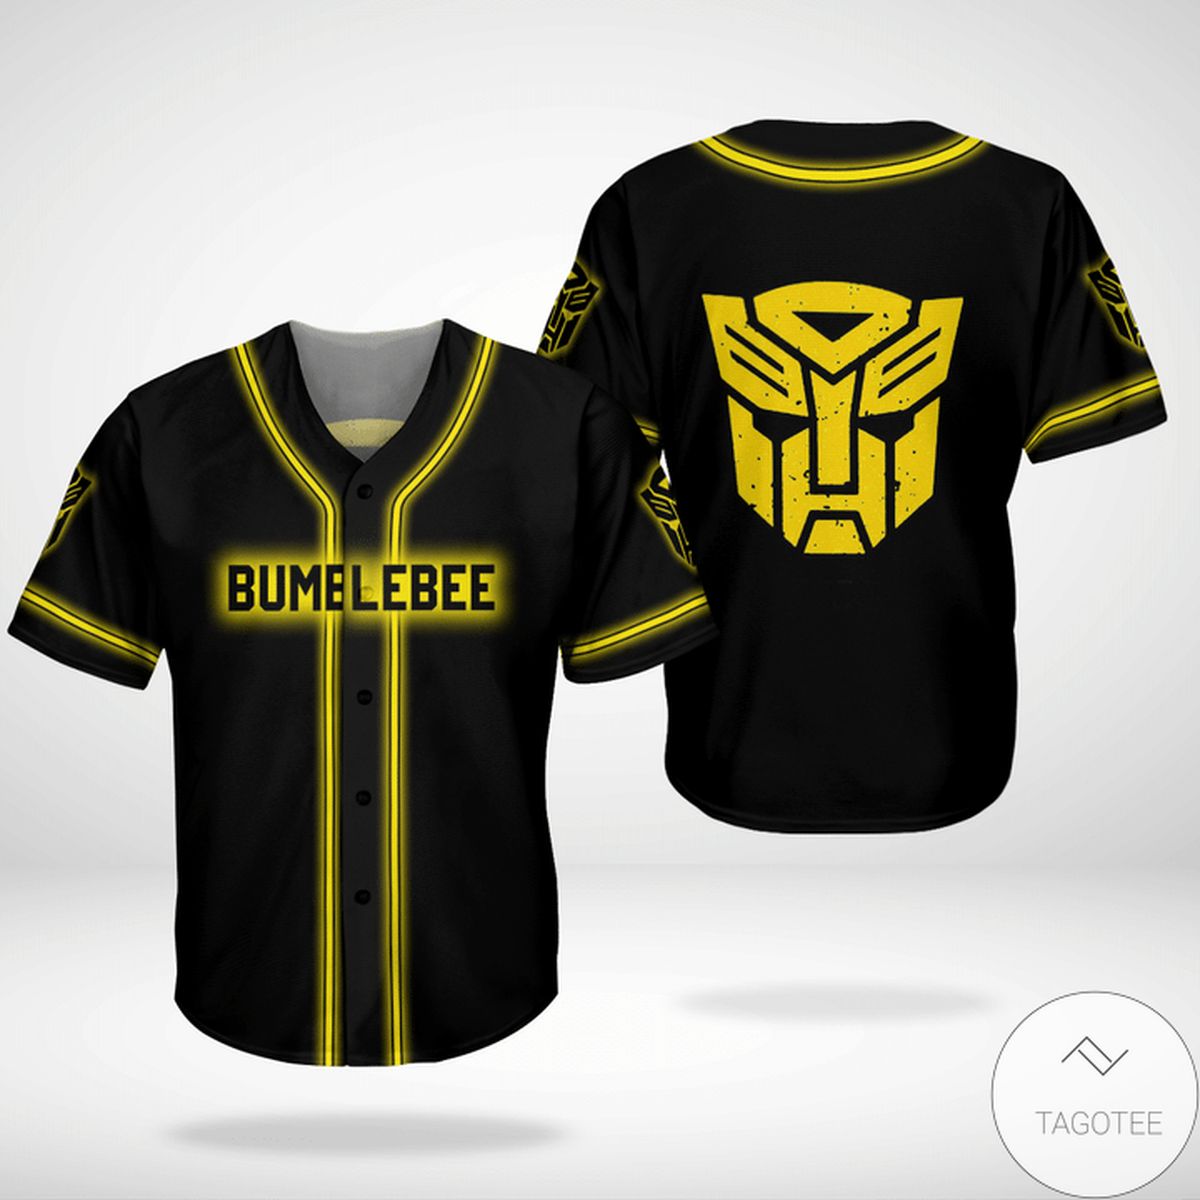 Bumblebee Transformer Jersey Baseball Shirt